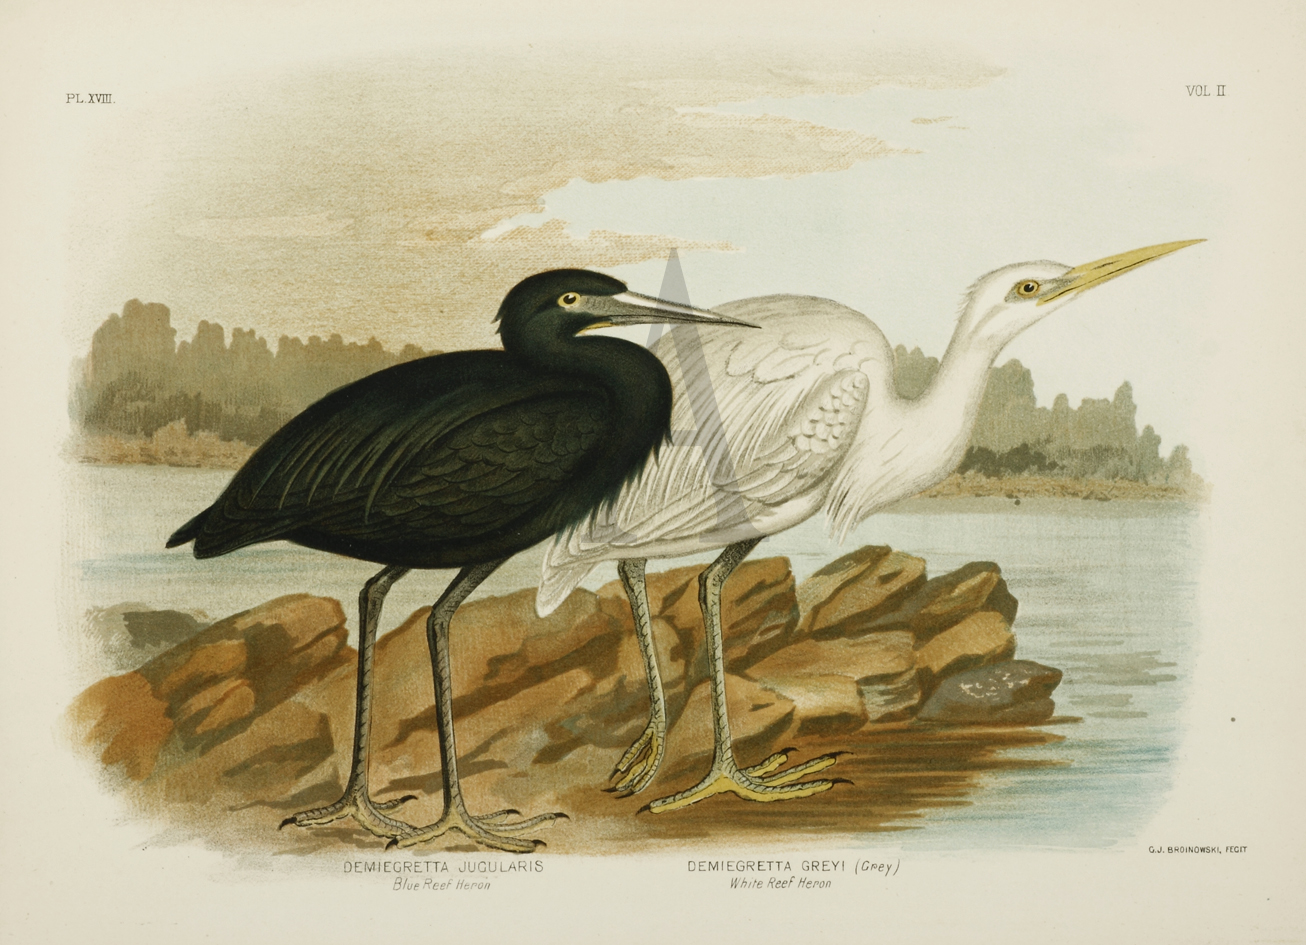 Demiegretta Jugularis. Blue Reef Heron. Demiegretta Greyi. White Reef Heron. - Antique Print from 1889